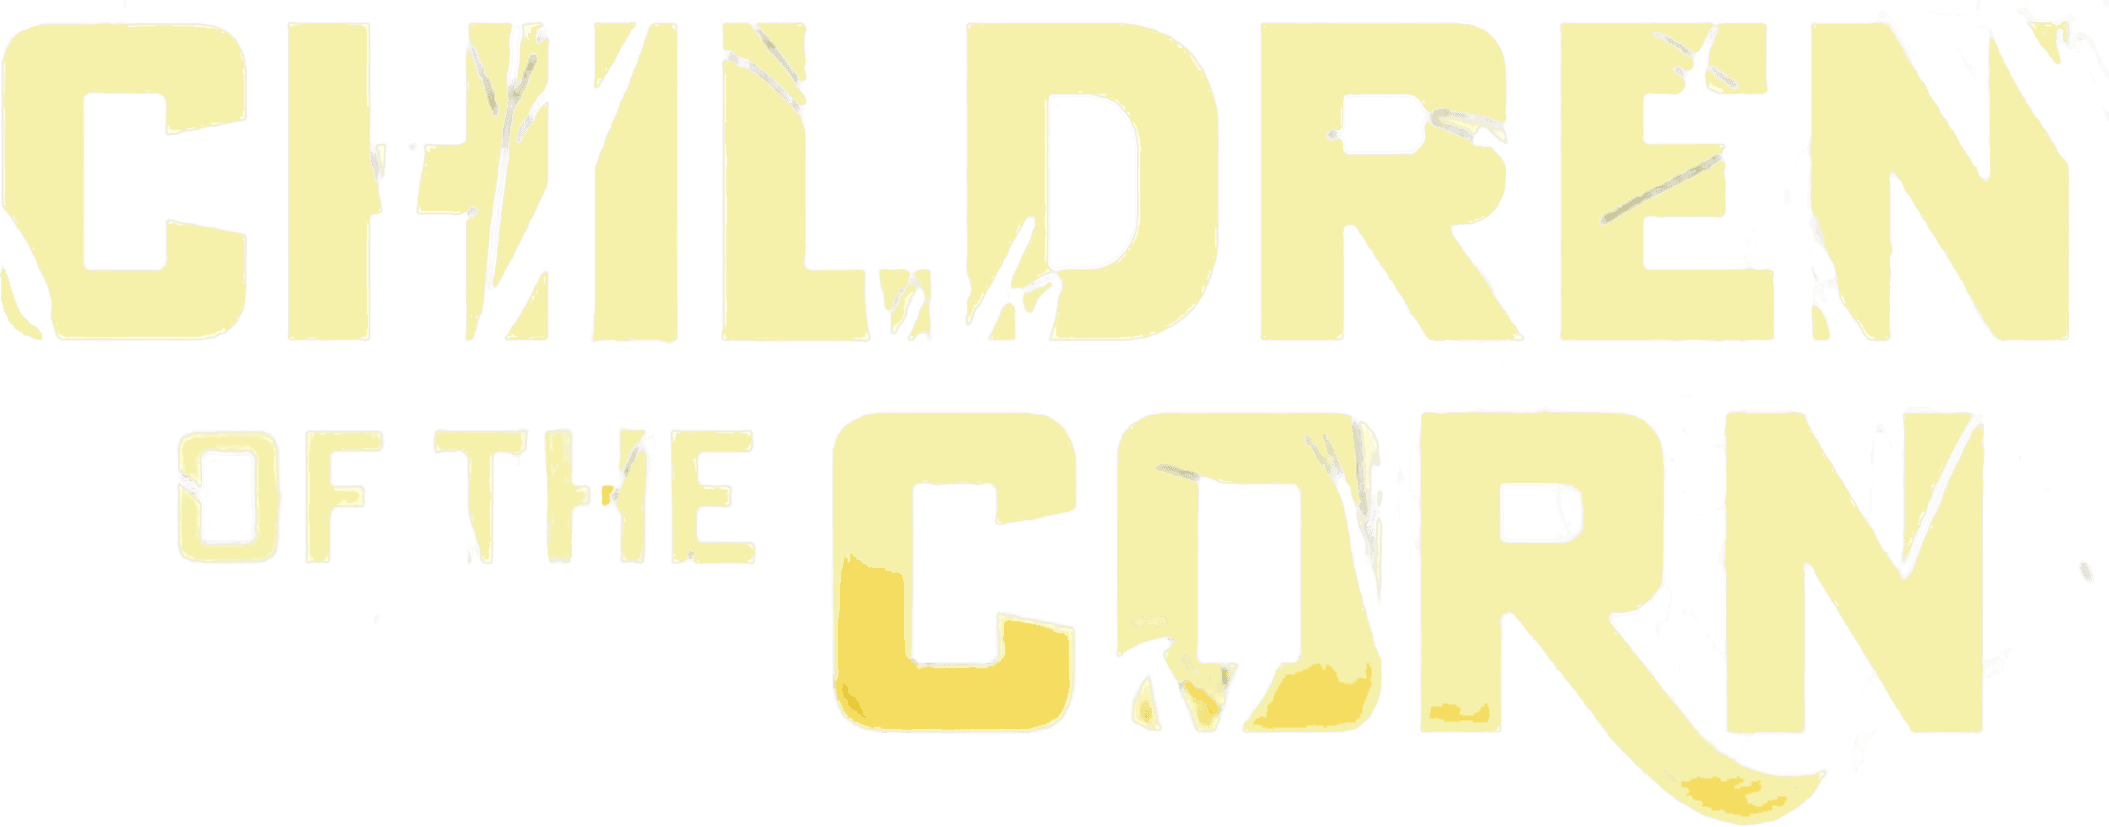 Children of the Corn logo